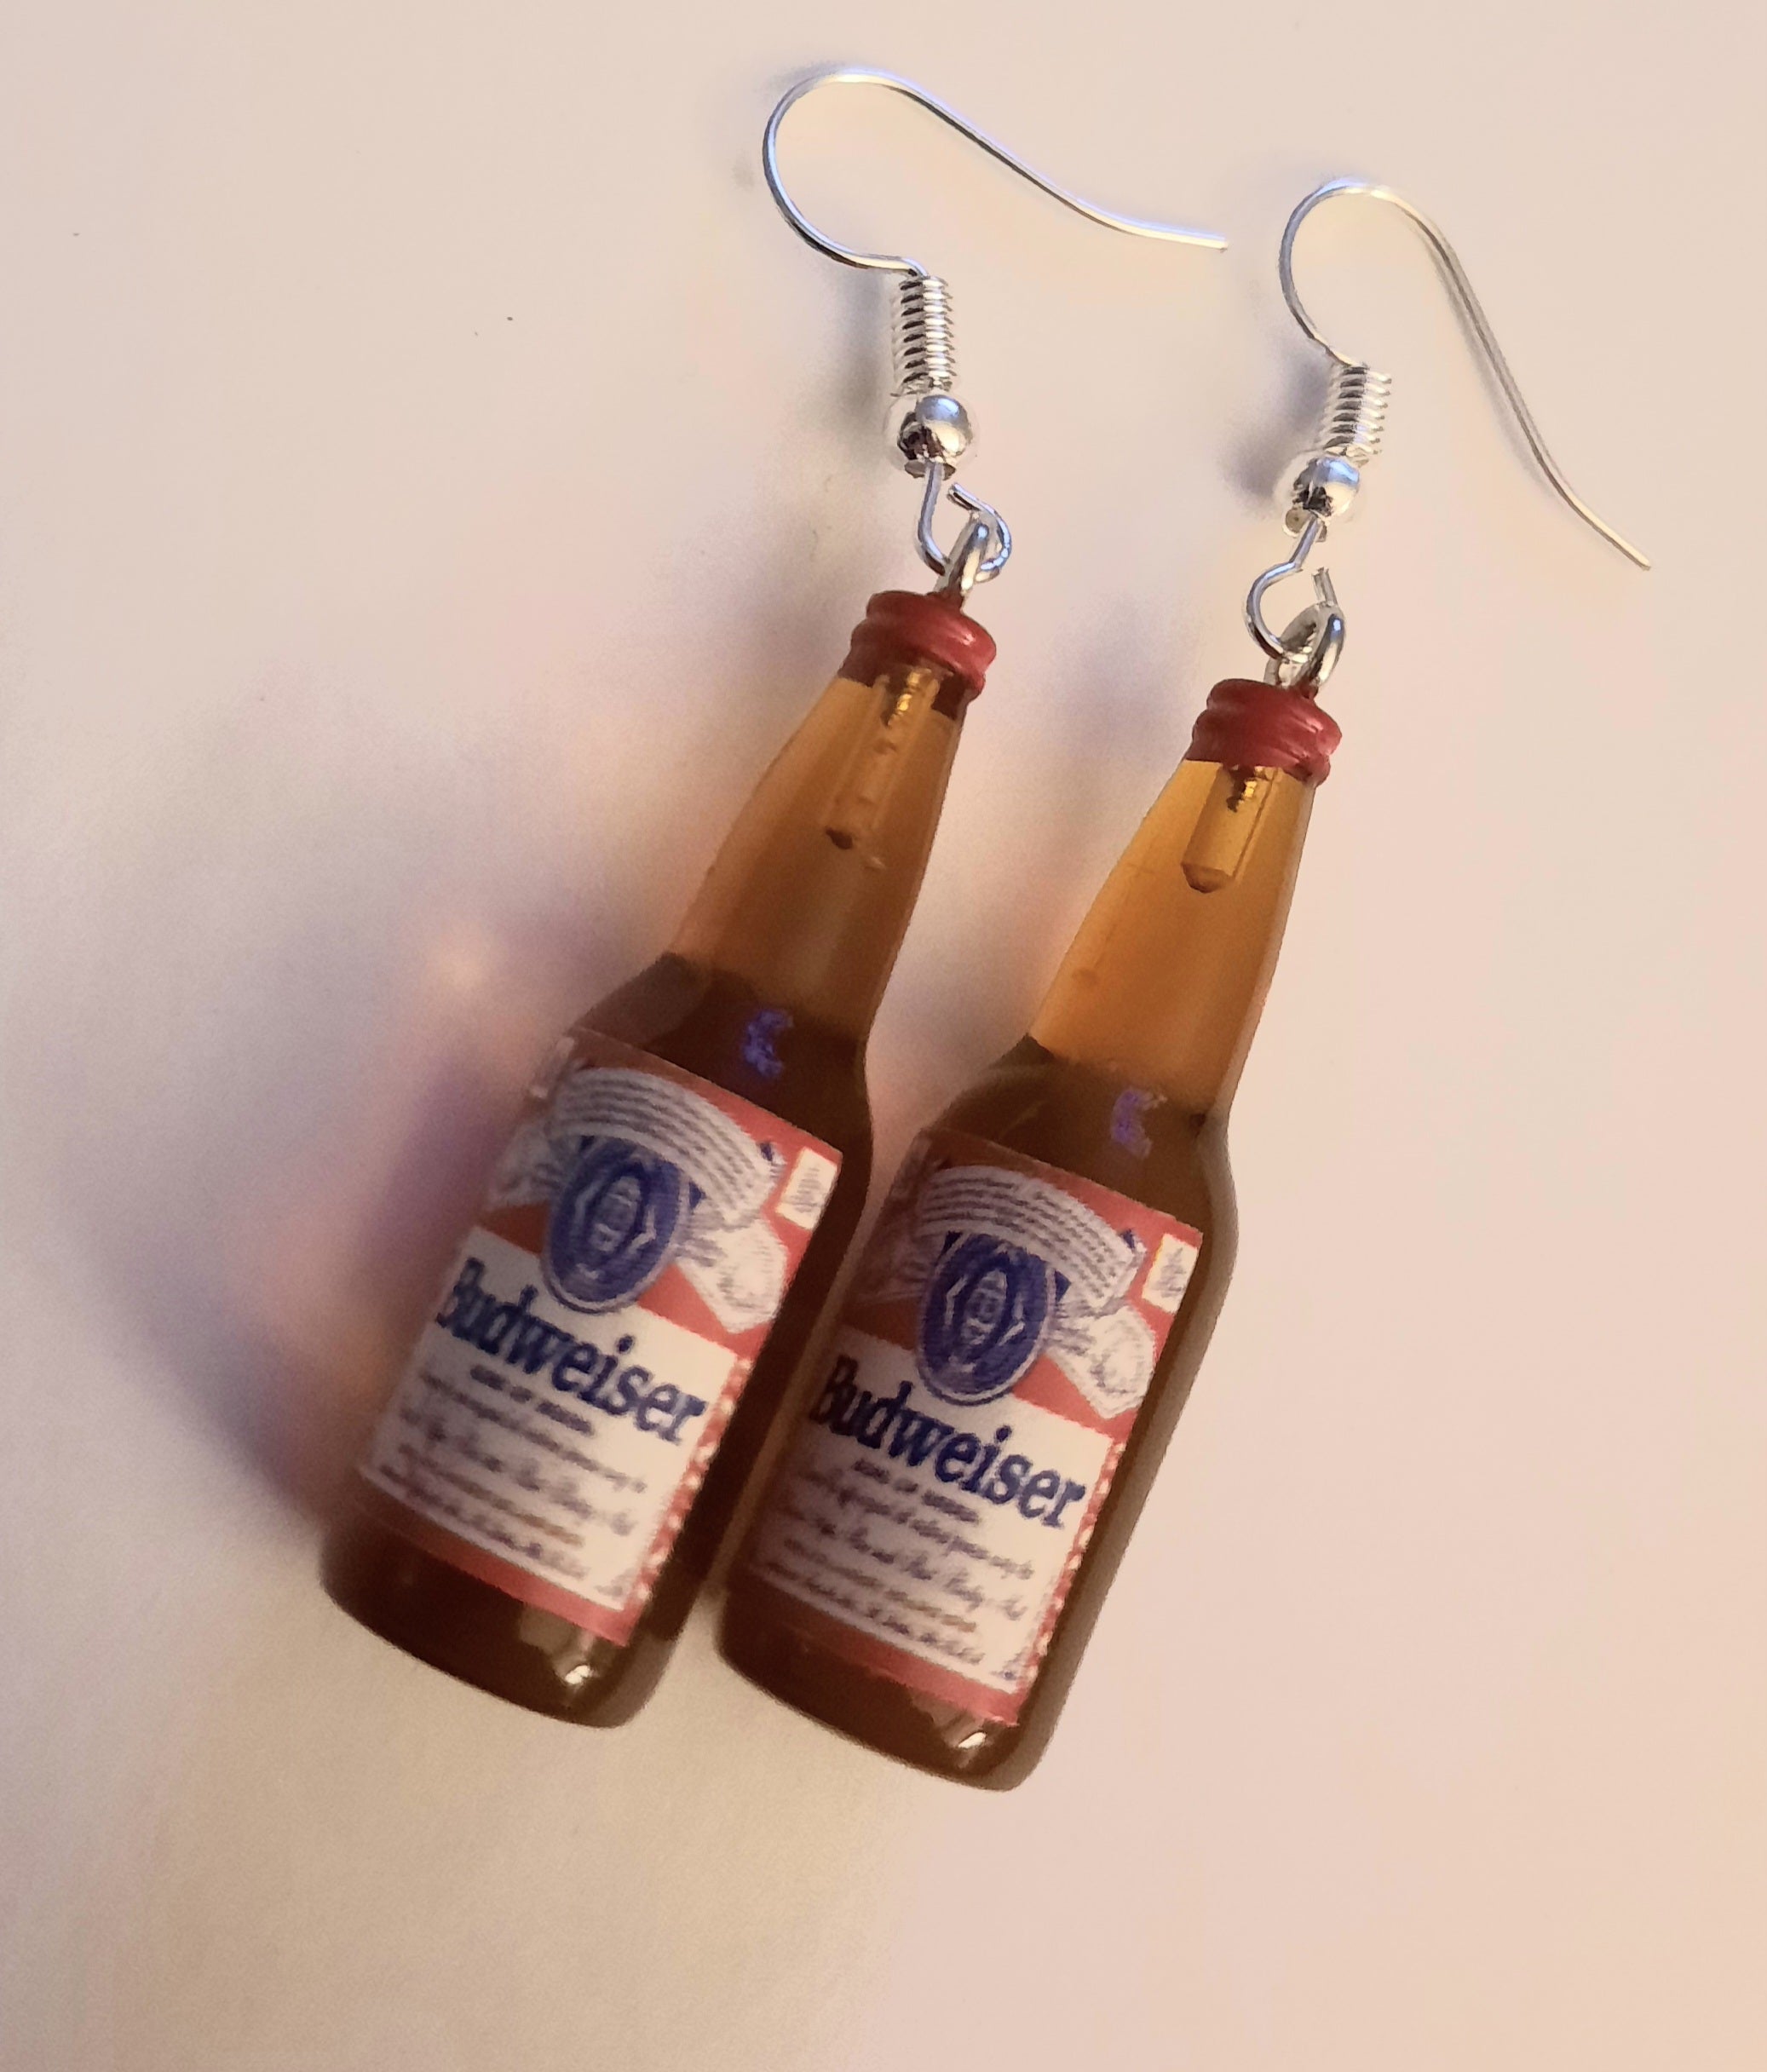 Budweiser bottle earrings